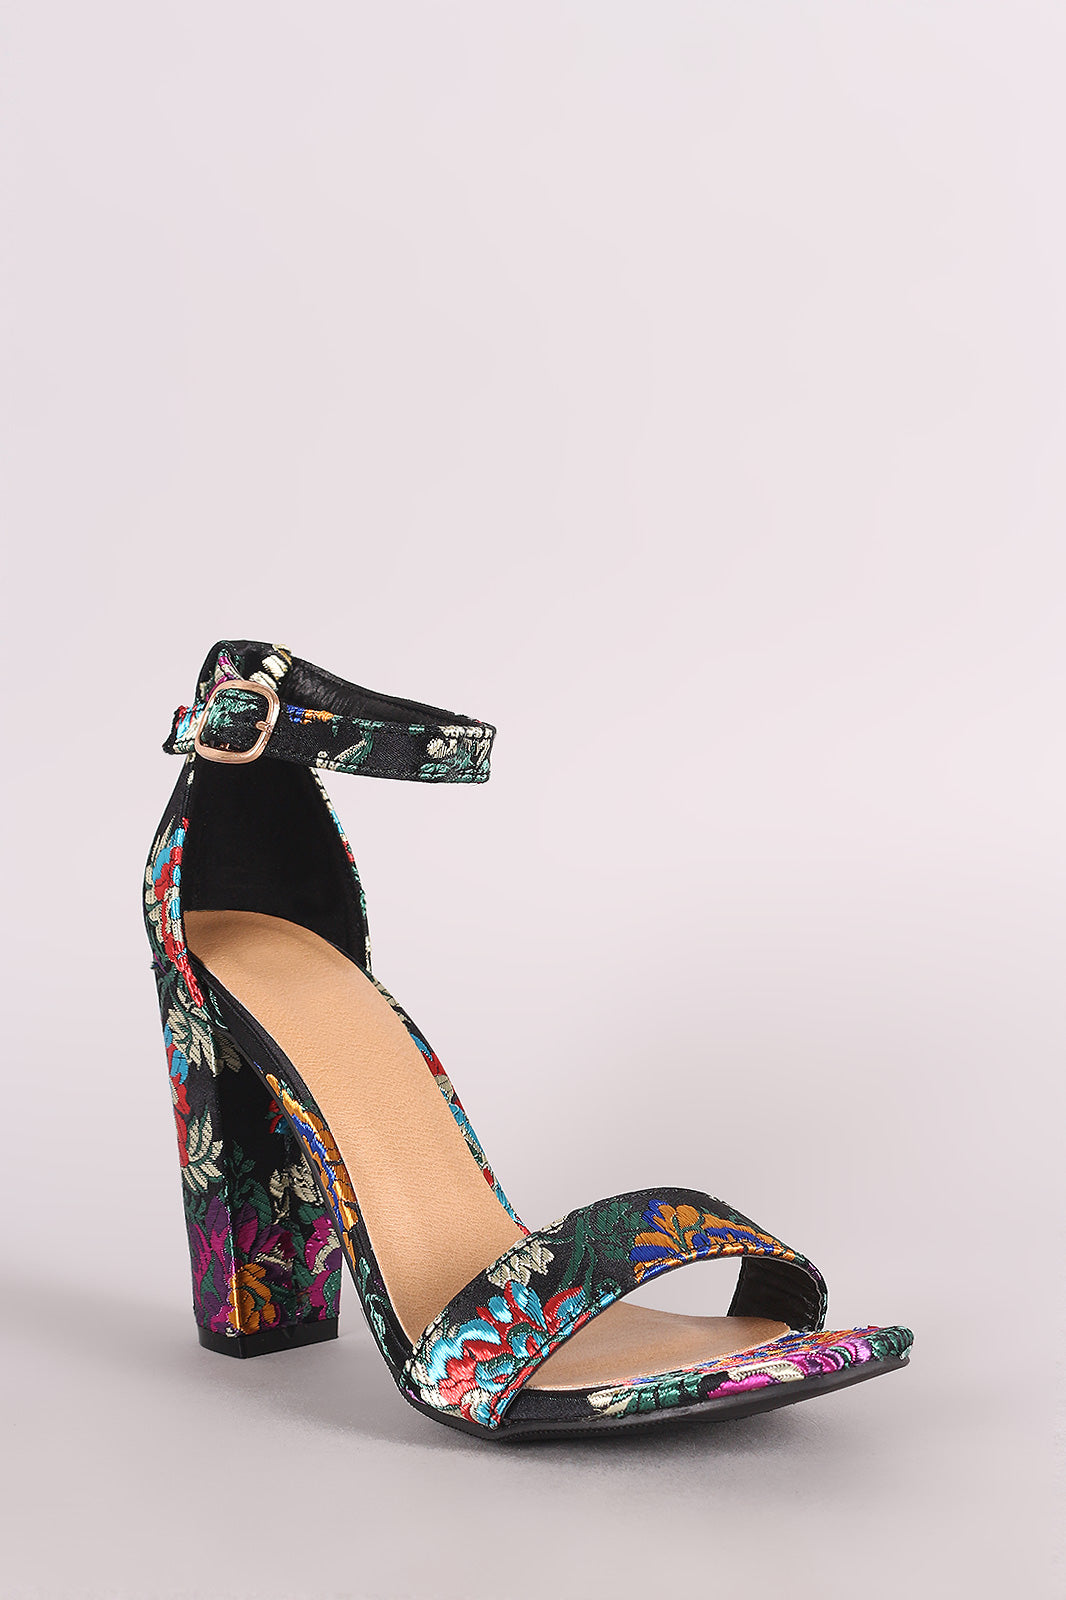 floral heels open toe